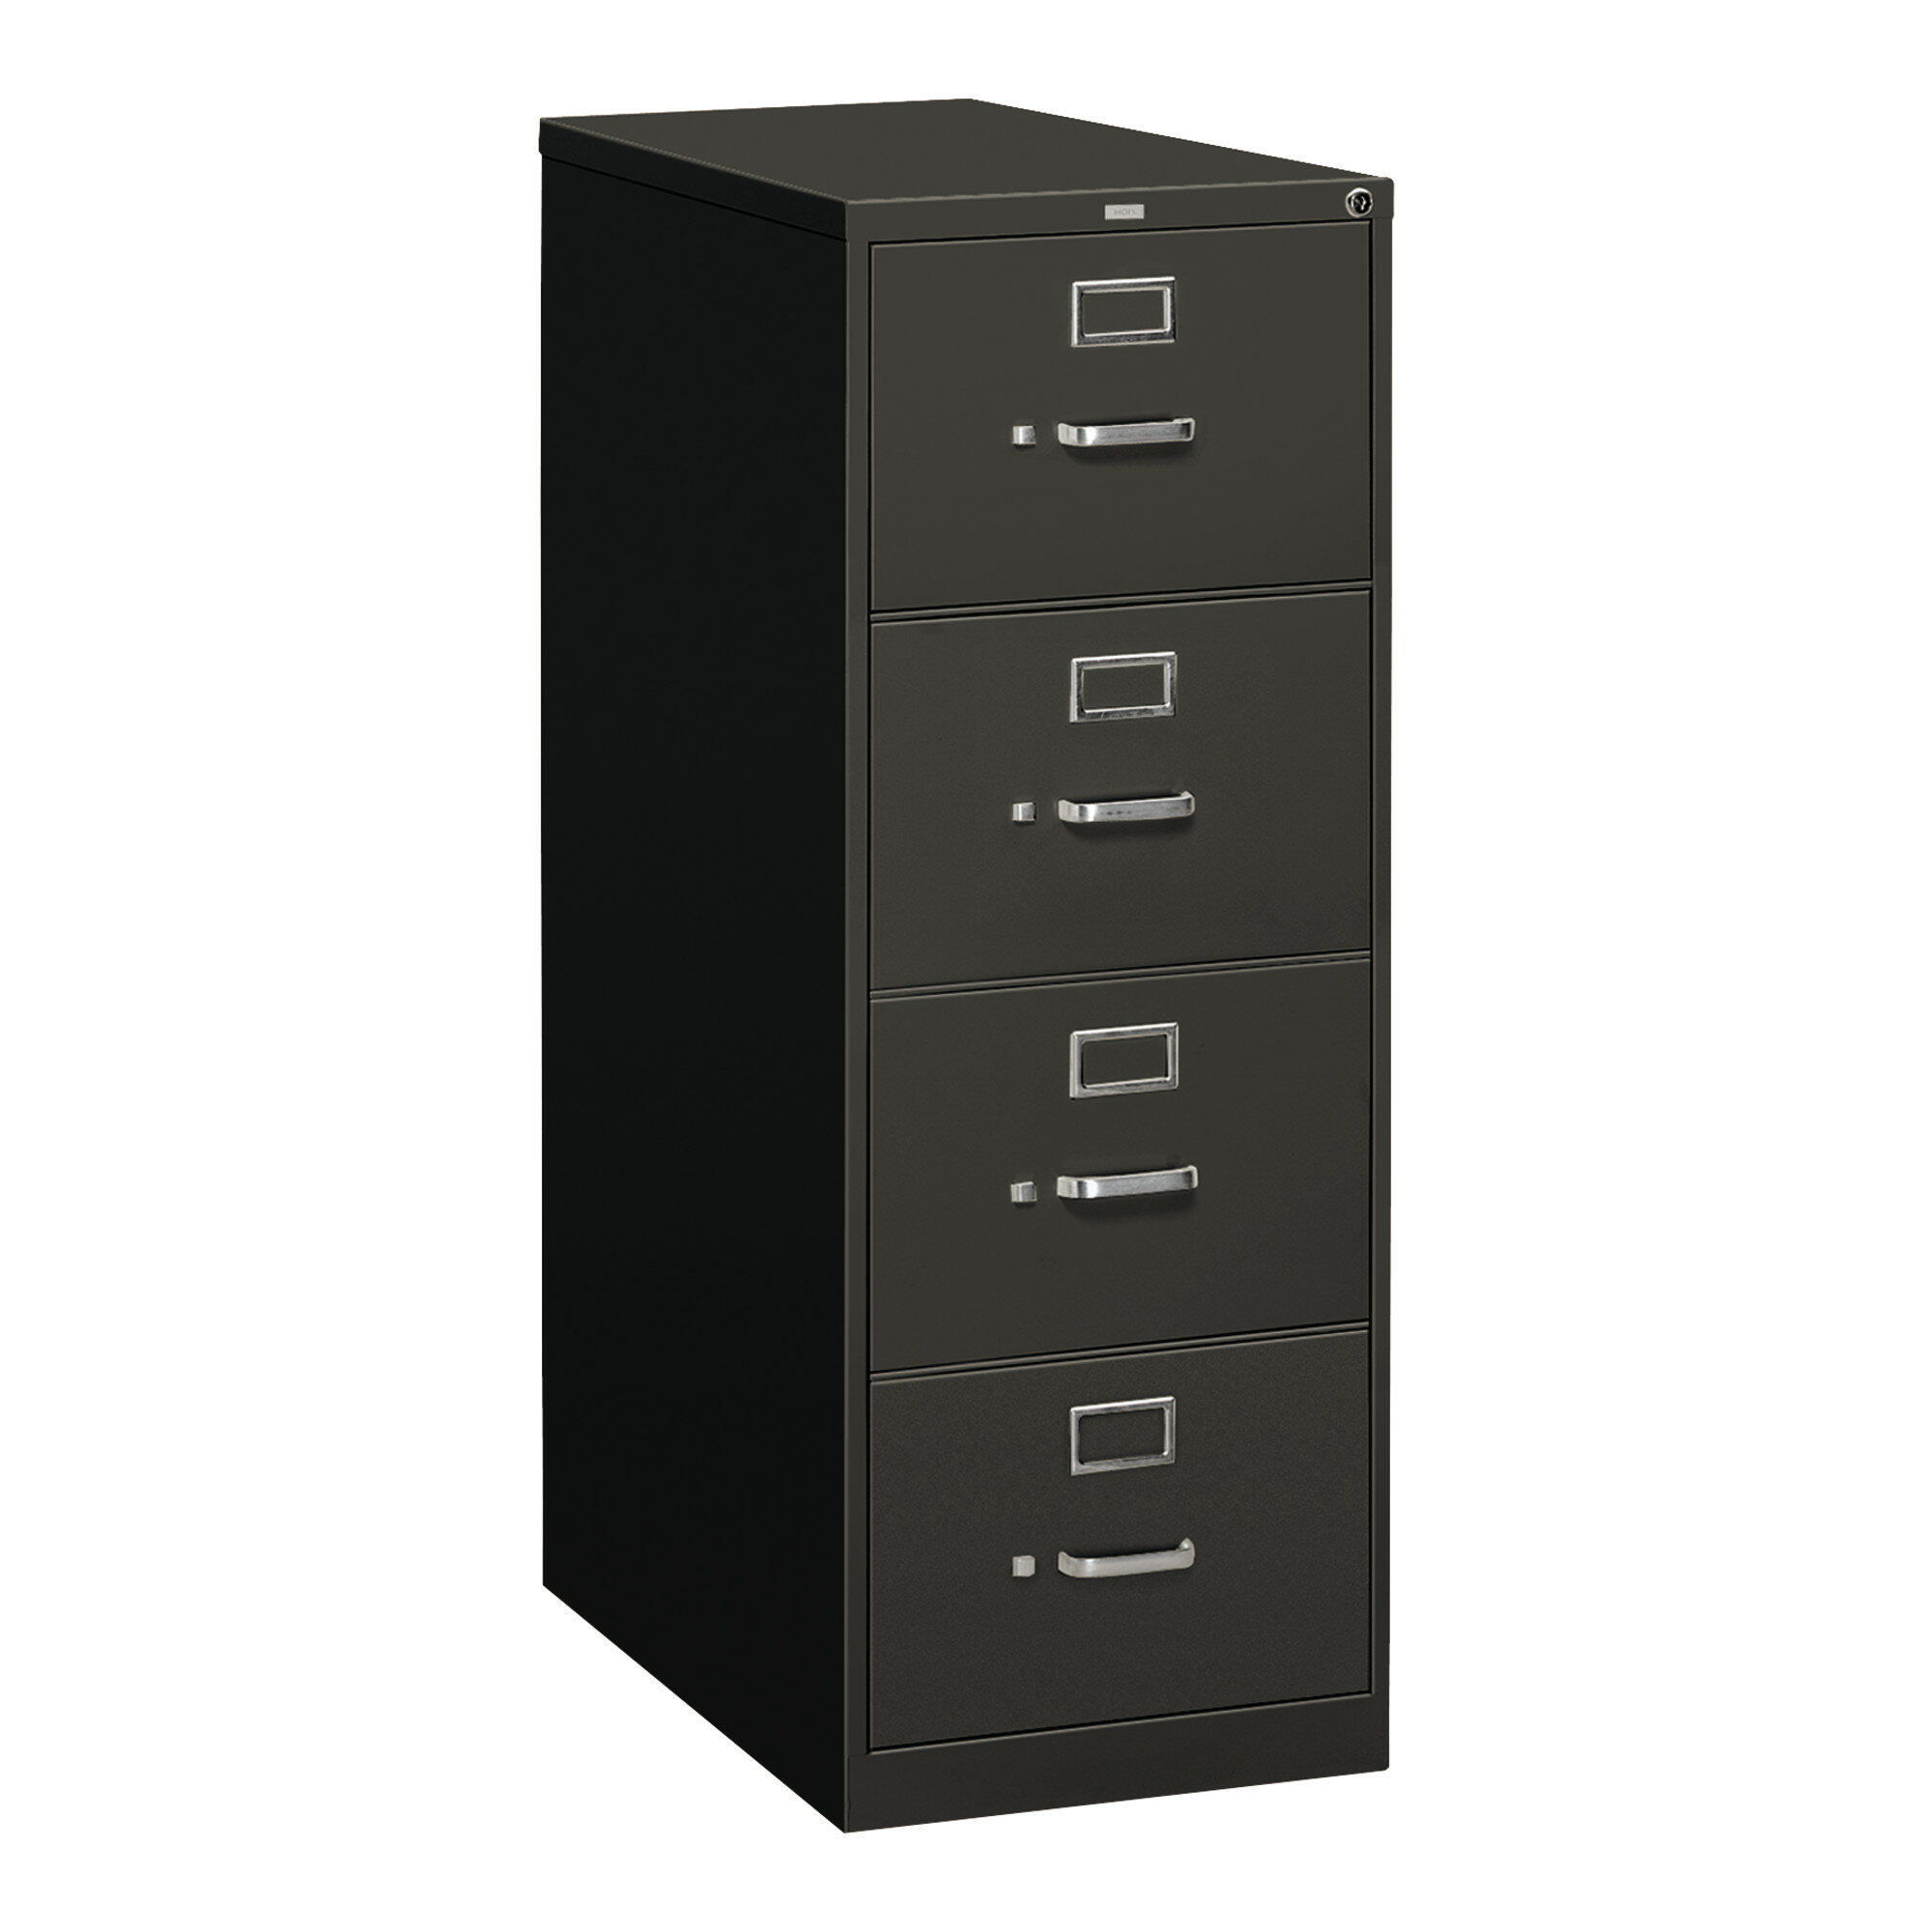 Hon 310 Series 4 Drawer Vertical Filing Cabinet Wayfair throughout dimensions 2000 X 2000